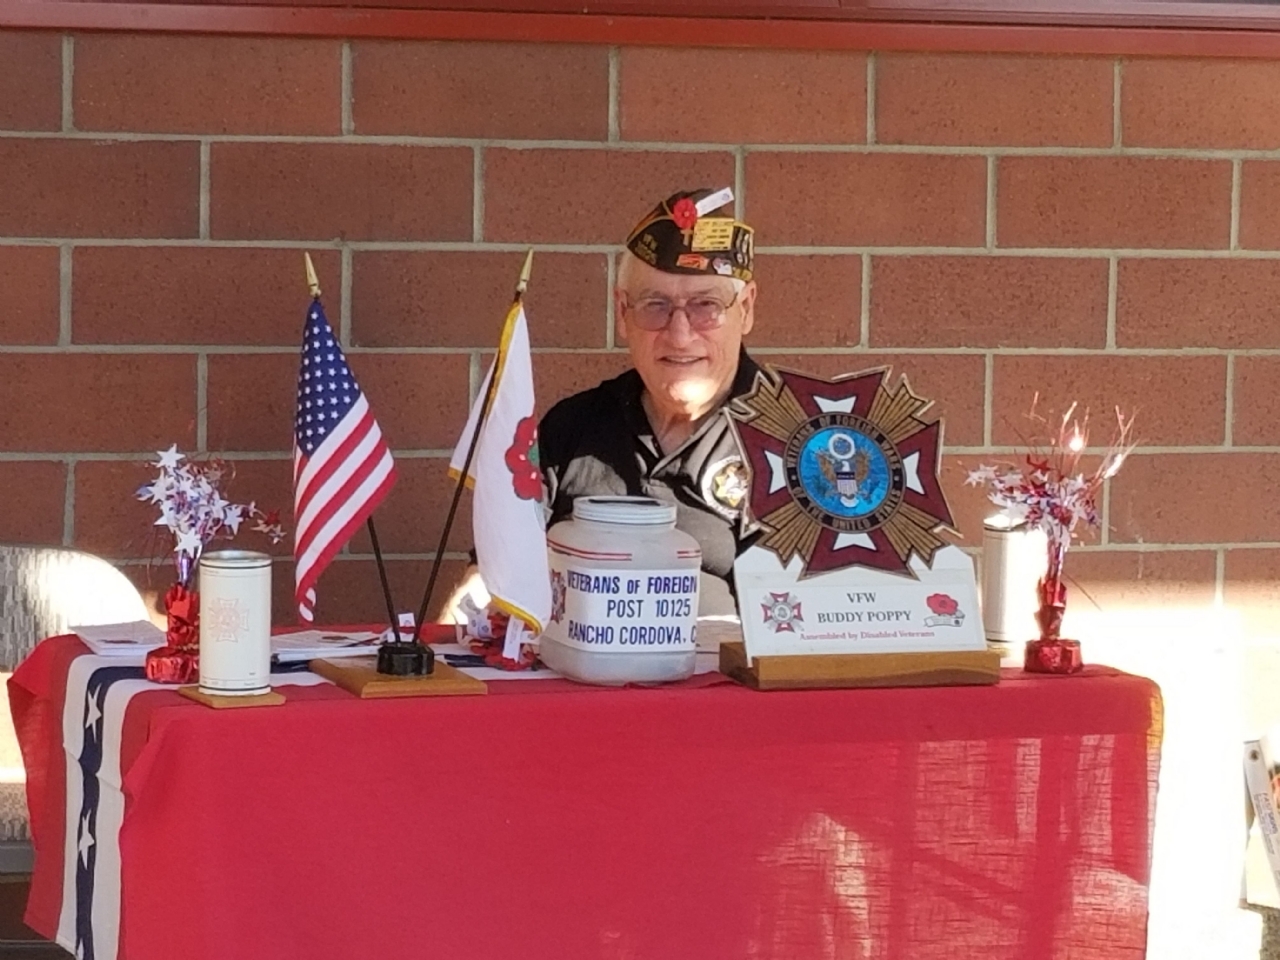 Photo's of Buddy Poppy for Veterans Day.